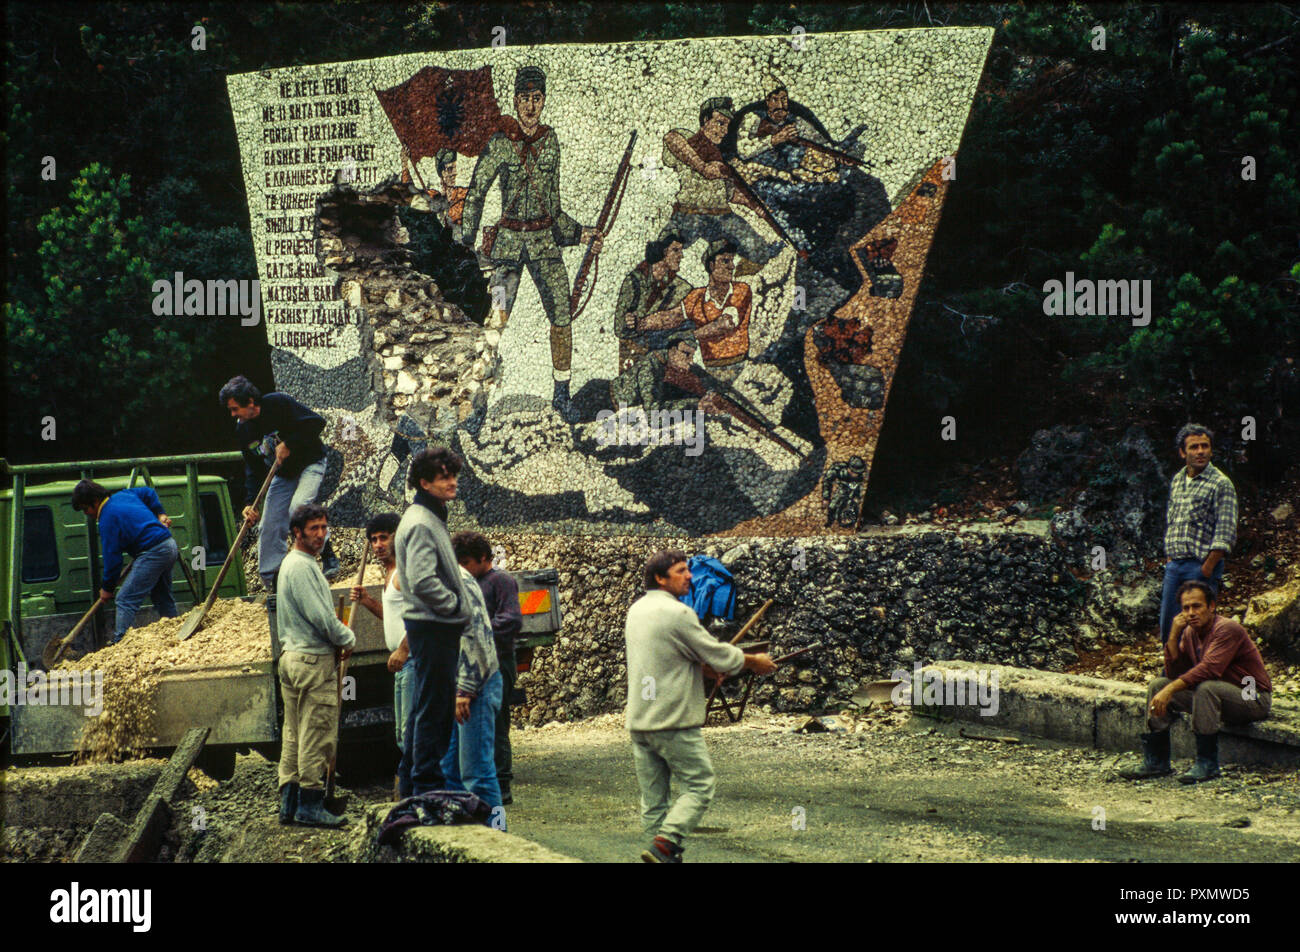 Wall mosaic, Dukat Vlore. Analogue photography Stock Photo